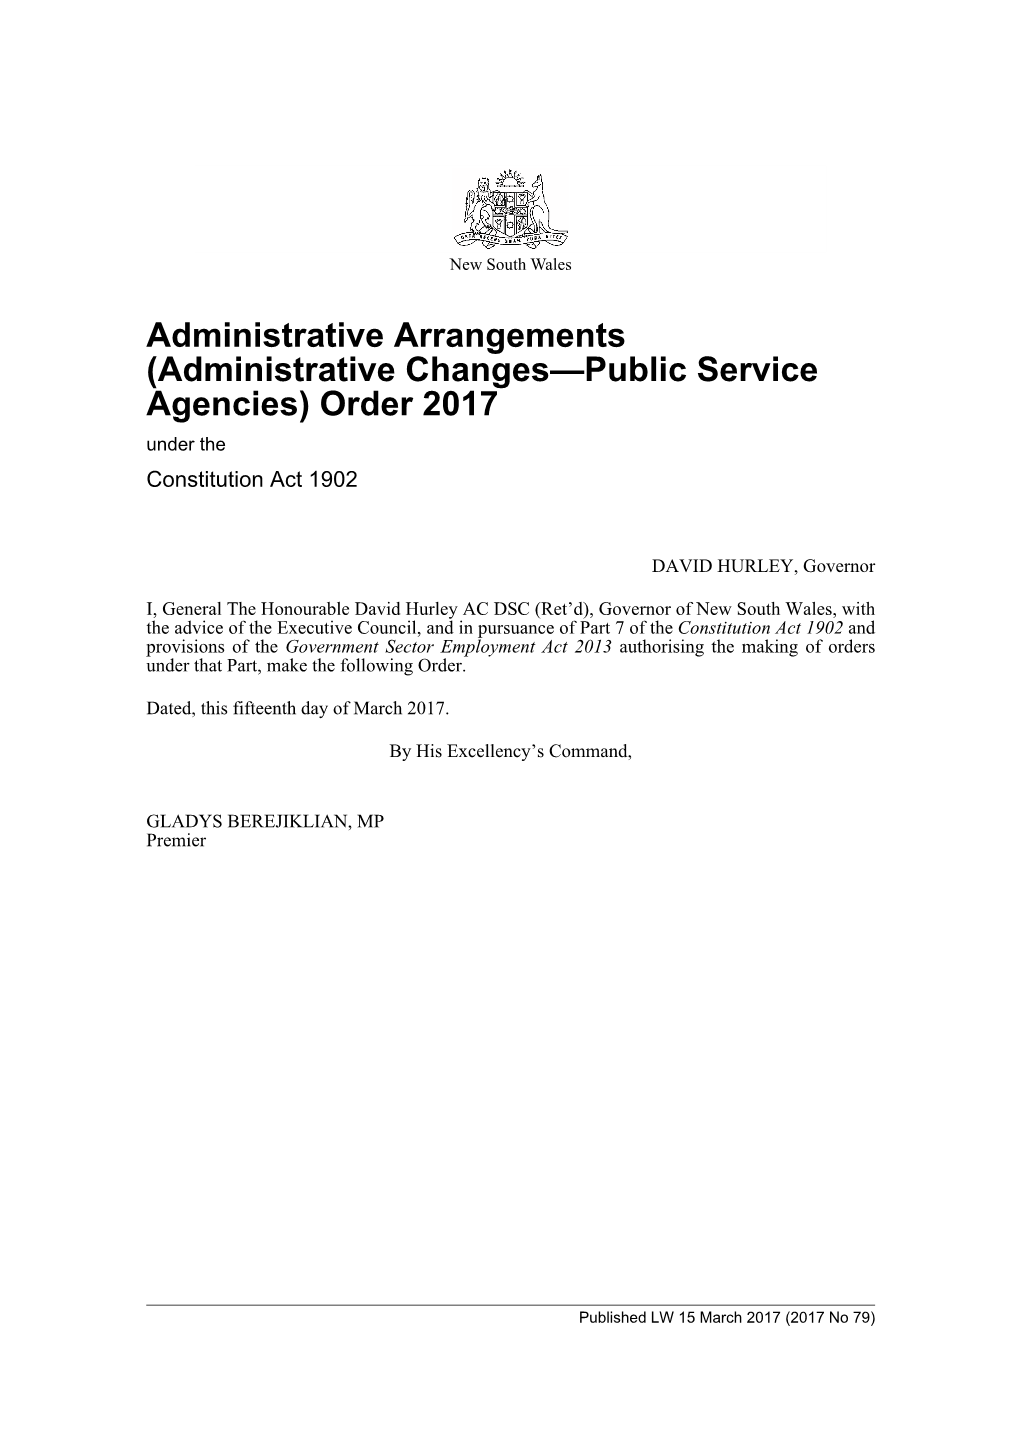 Administrative Arrangements (Administrative Changes—Public Service Agencies) Order 2017 Under the Constitution Act 1902